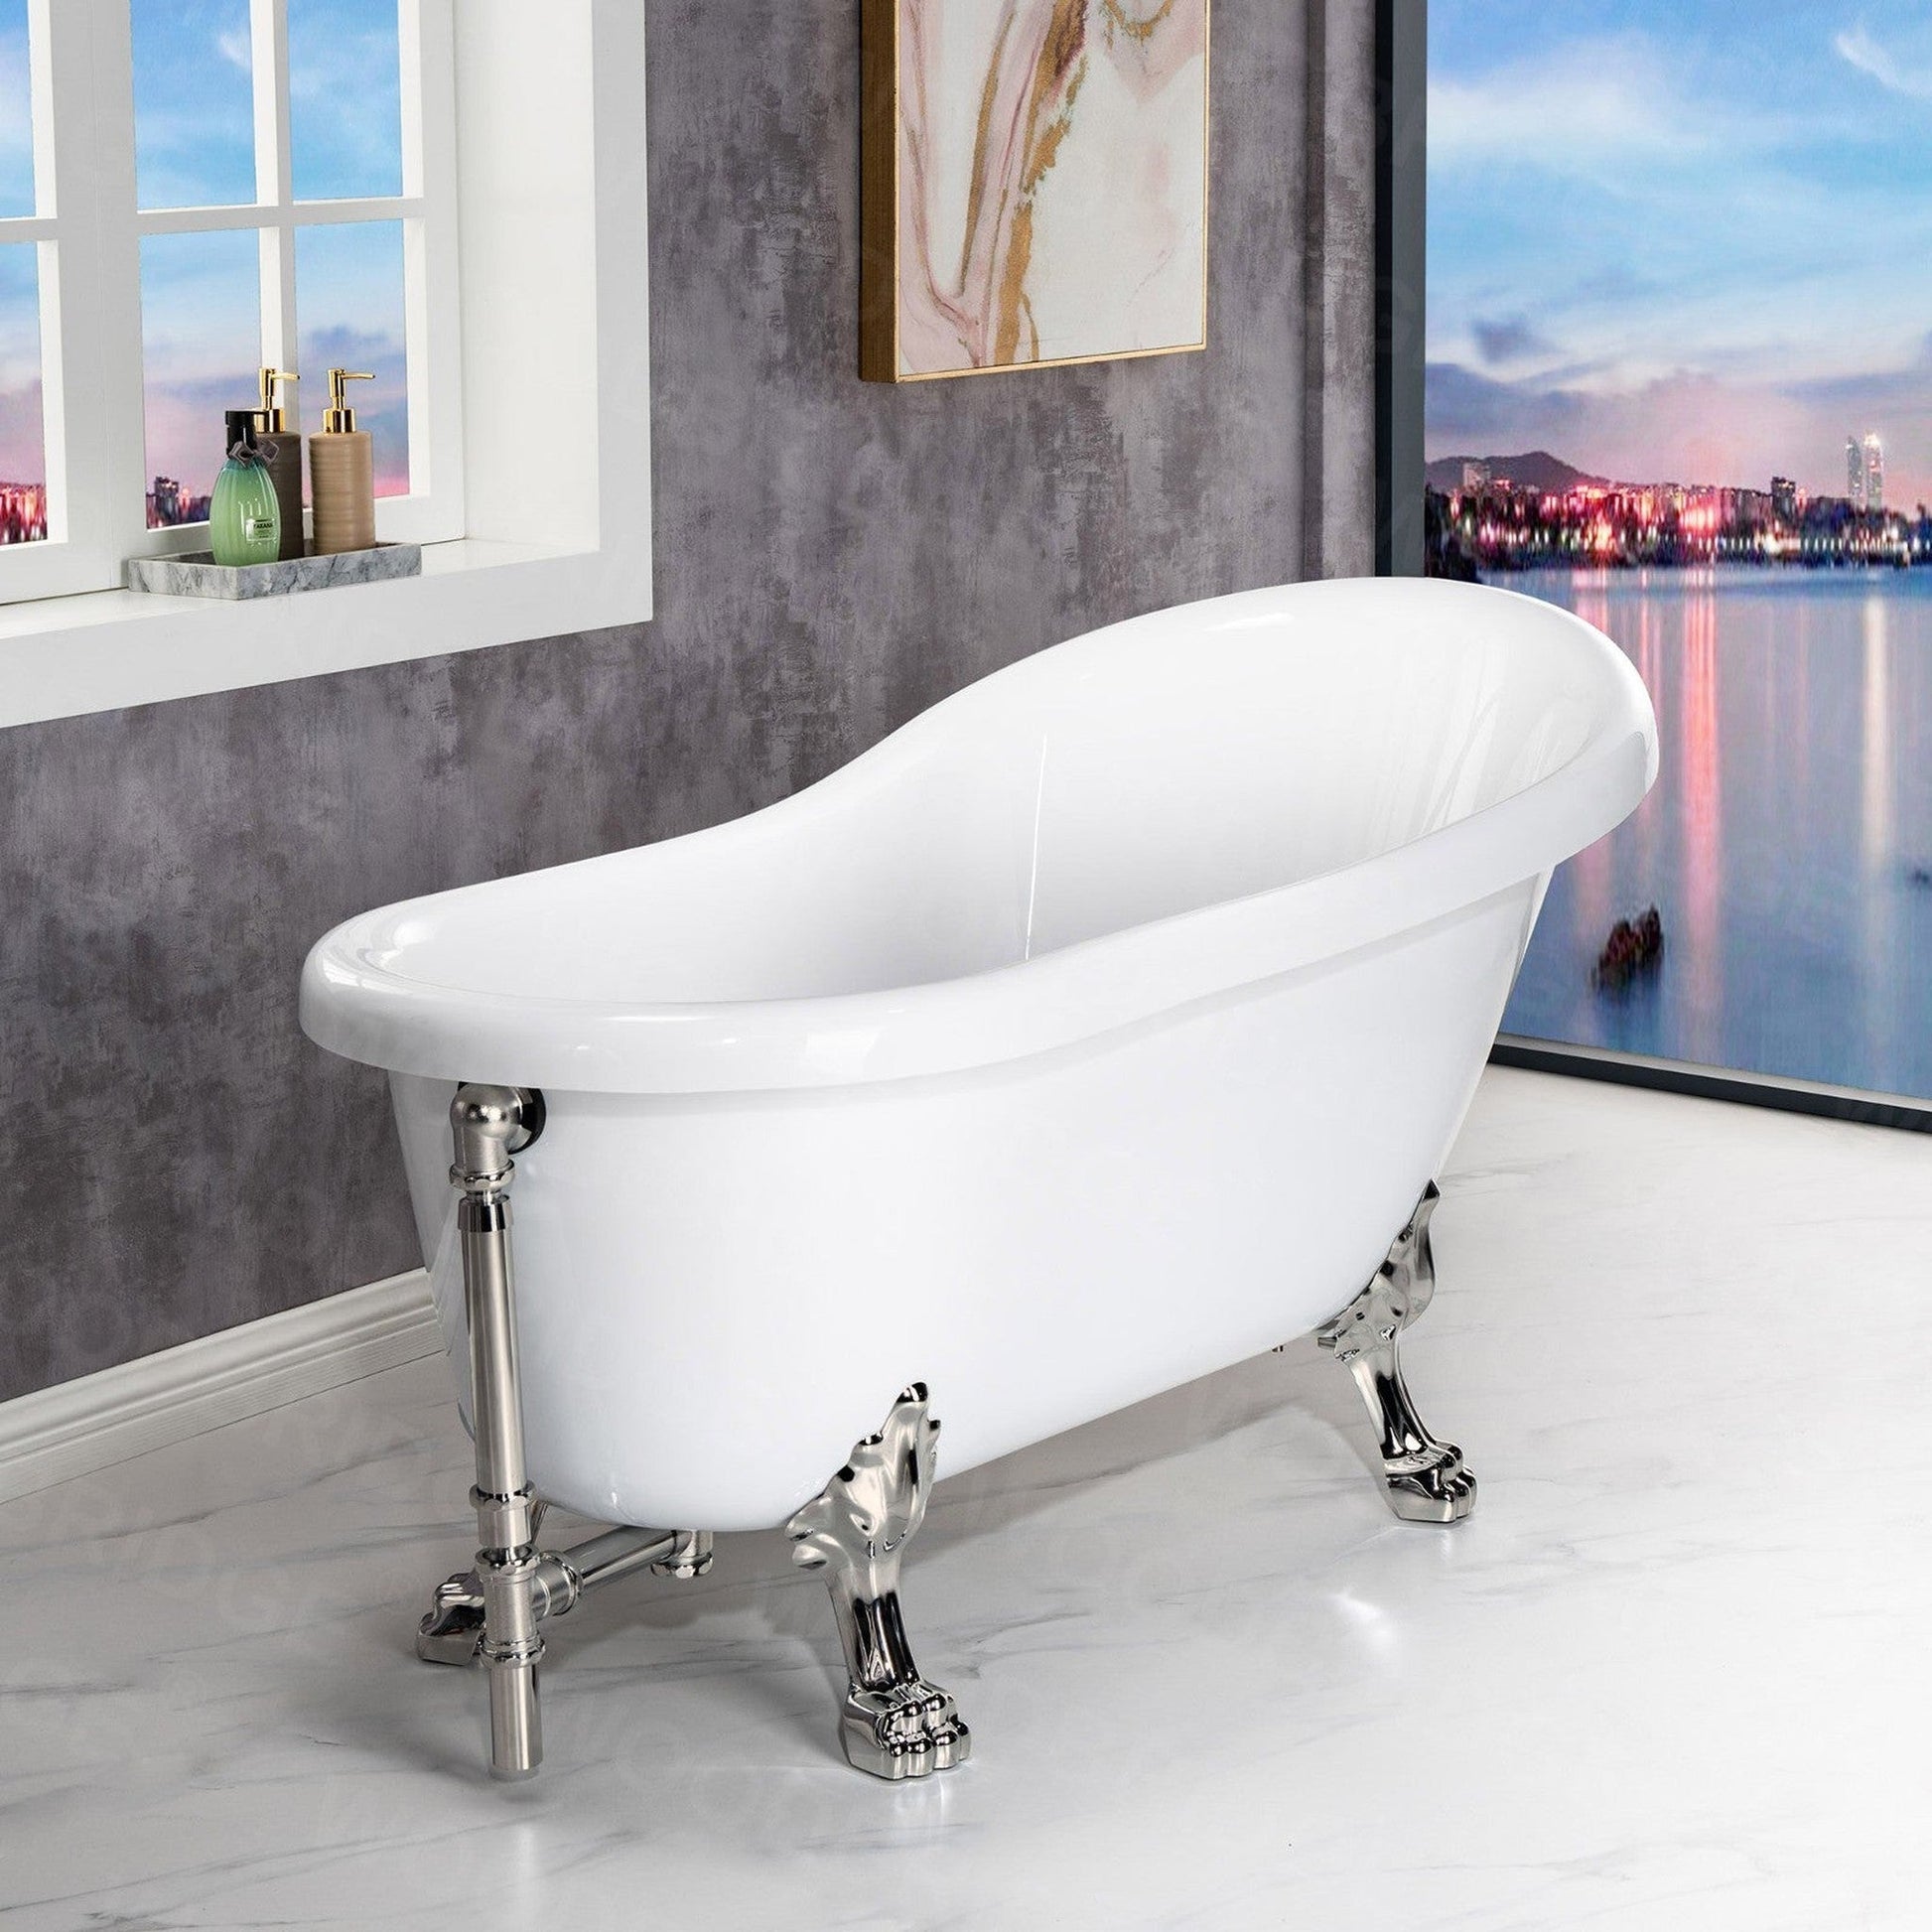 WoodBridge 59" White Acrylic Slipper Clawfoot Bath Tub With Brushed Nickel Feet, Drain, Overflow, F0070BNVT Tub Filler and Caddy Tray